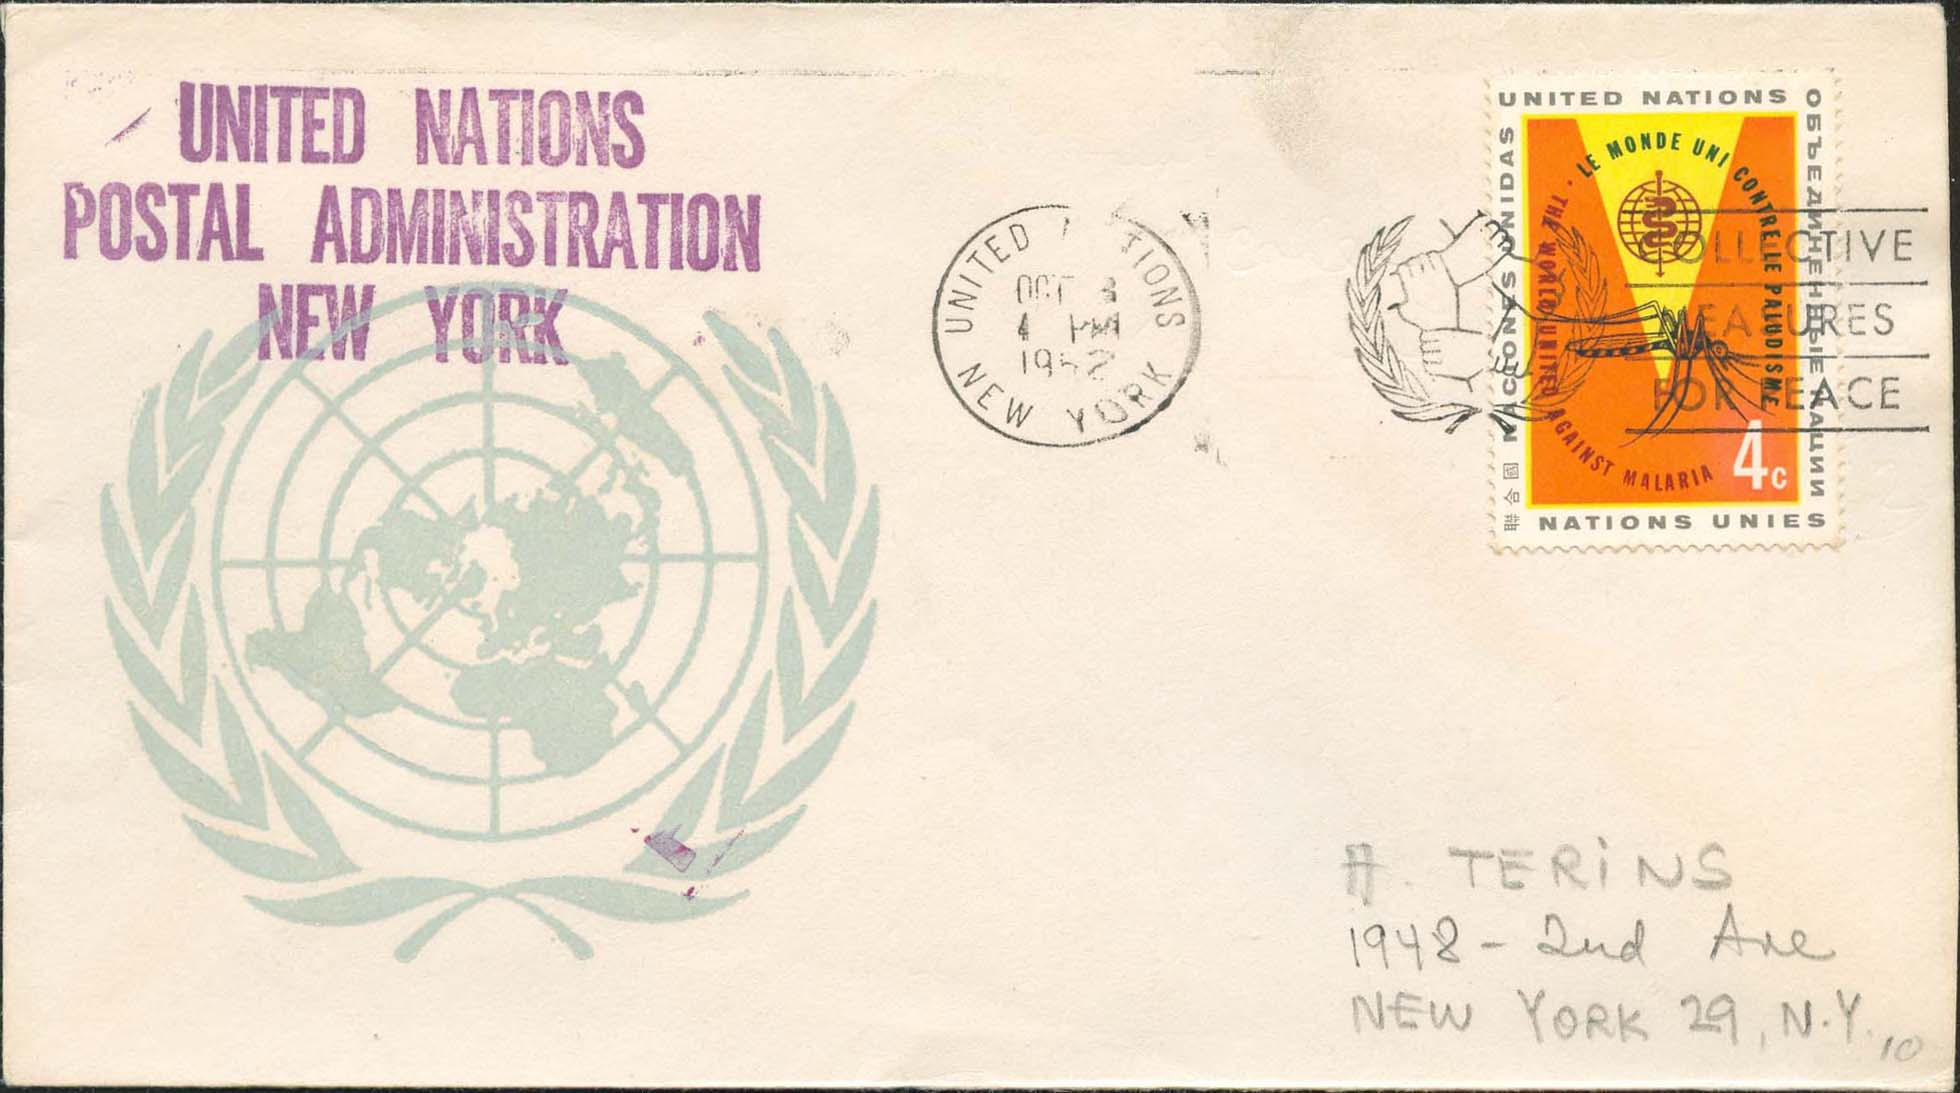 Scott 102 1st print - Oct 3, 1962 <br />Machine slogan cancel "Collective Measures for Peace"<br />UN Postal Administration rubber stamped return address